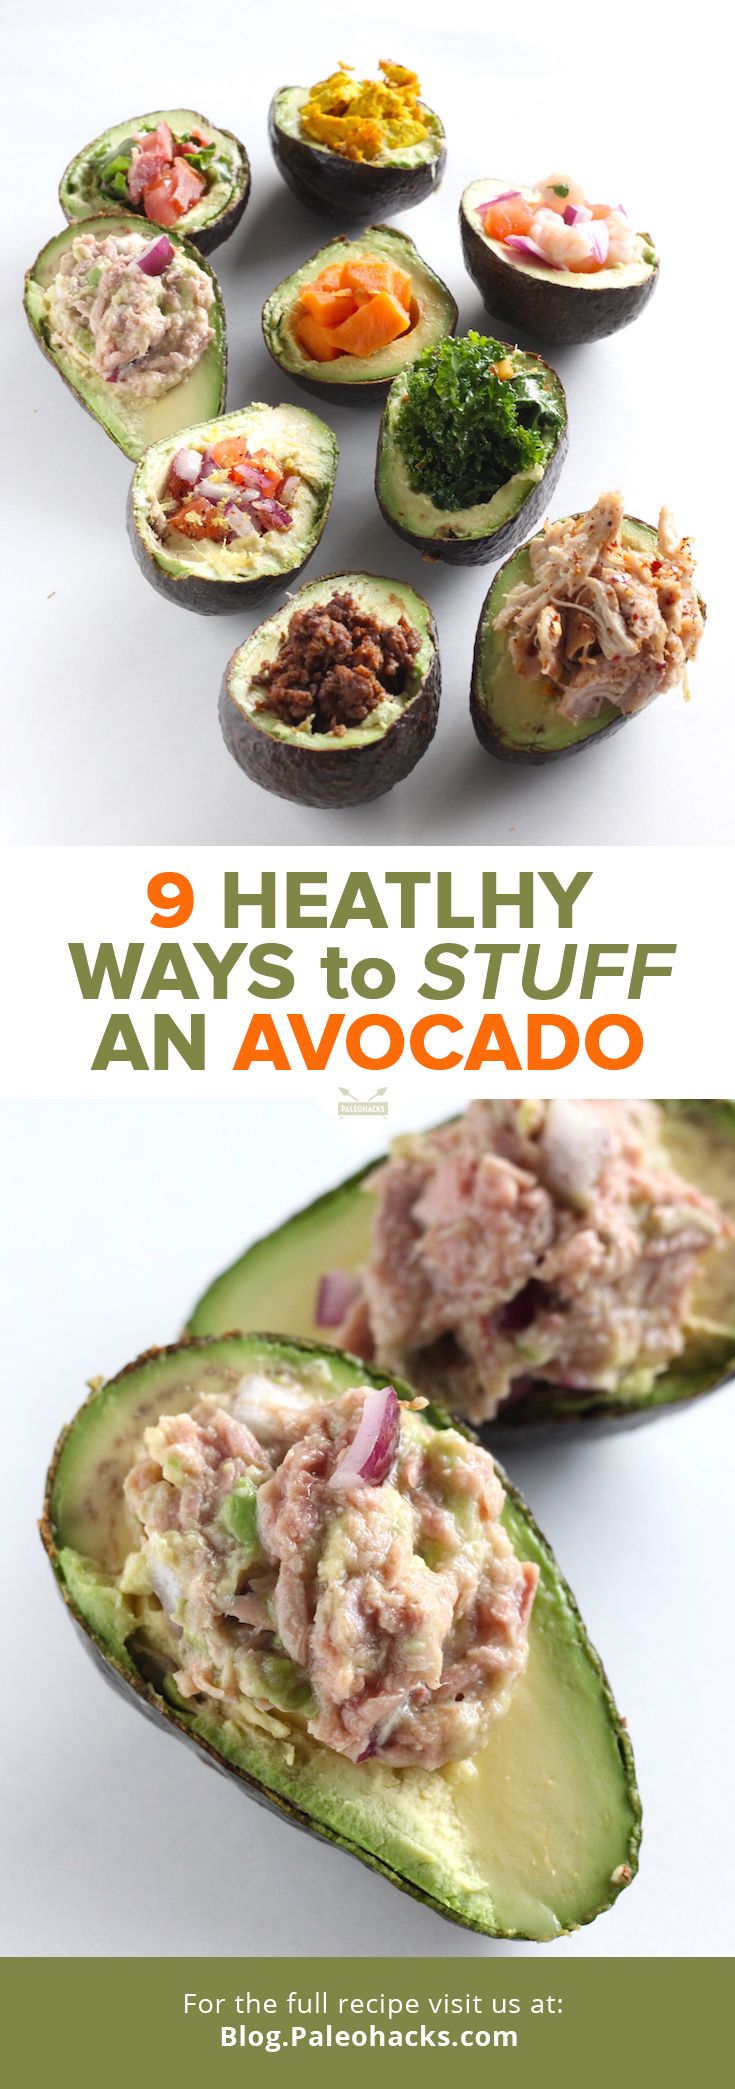 pin-9-healthy-ways-to-stuff-an-avocado